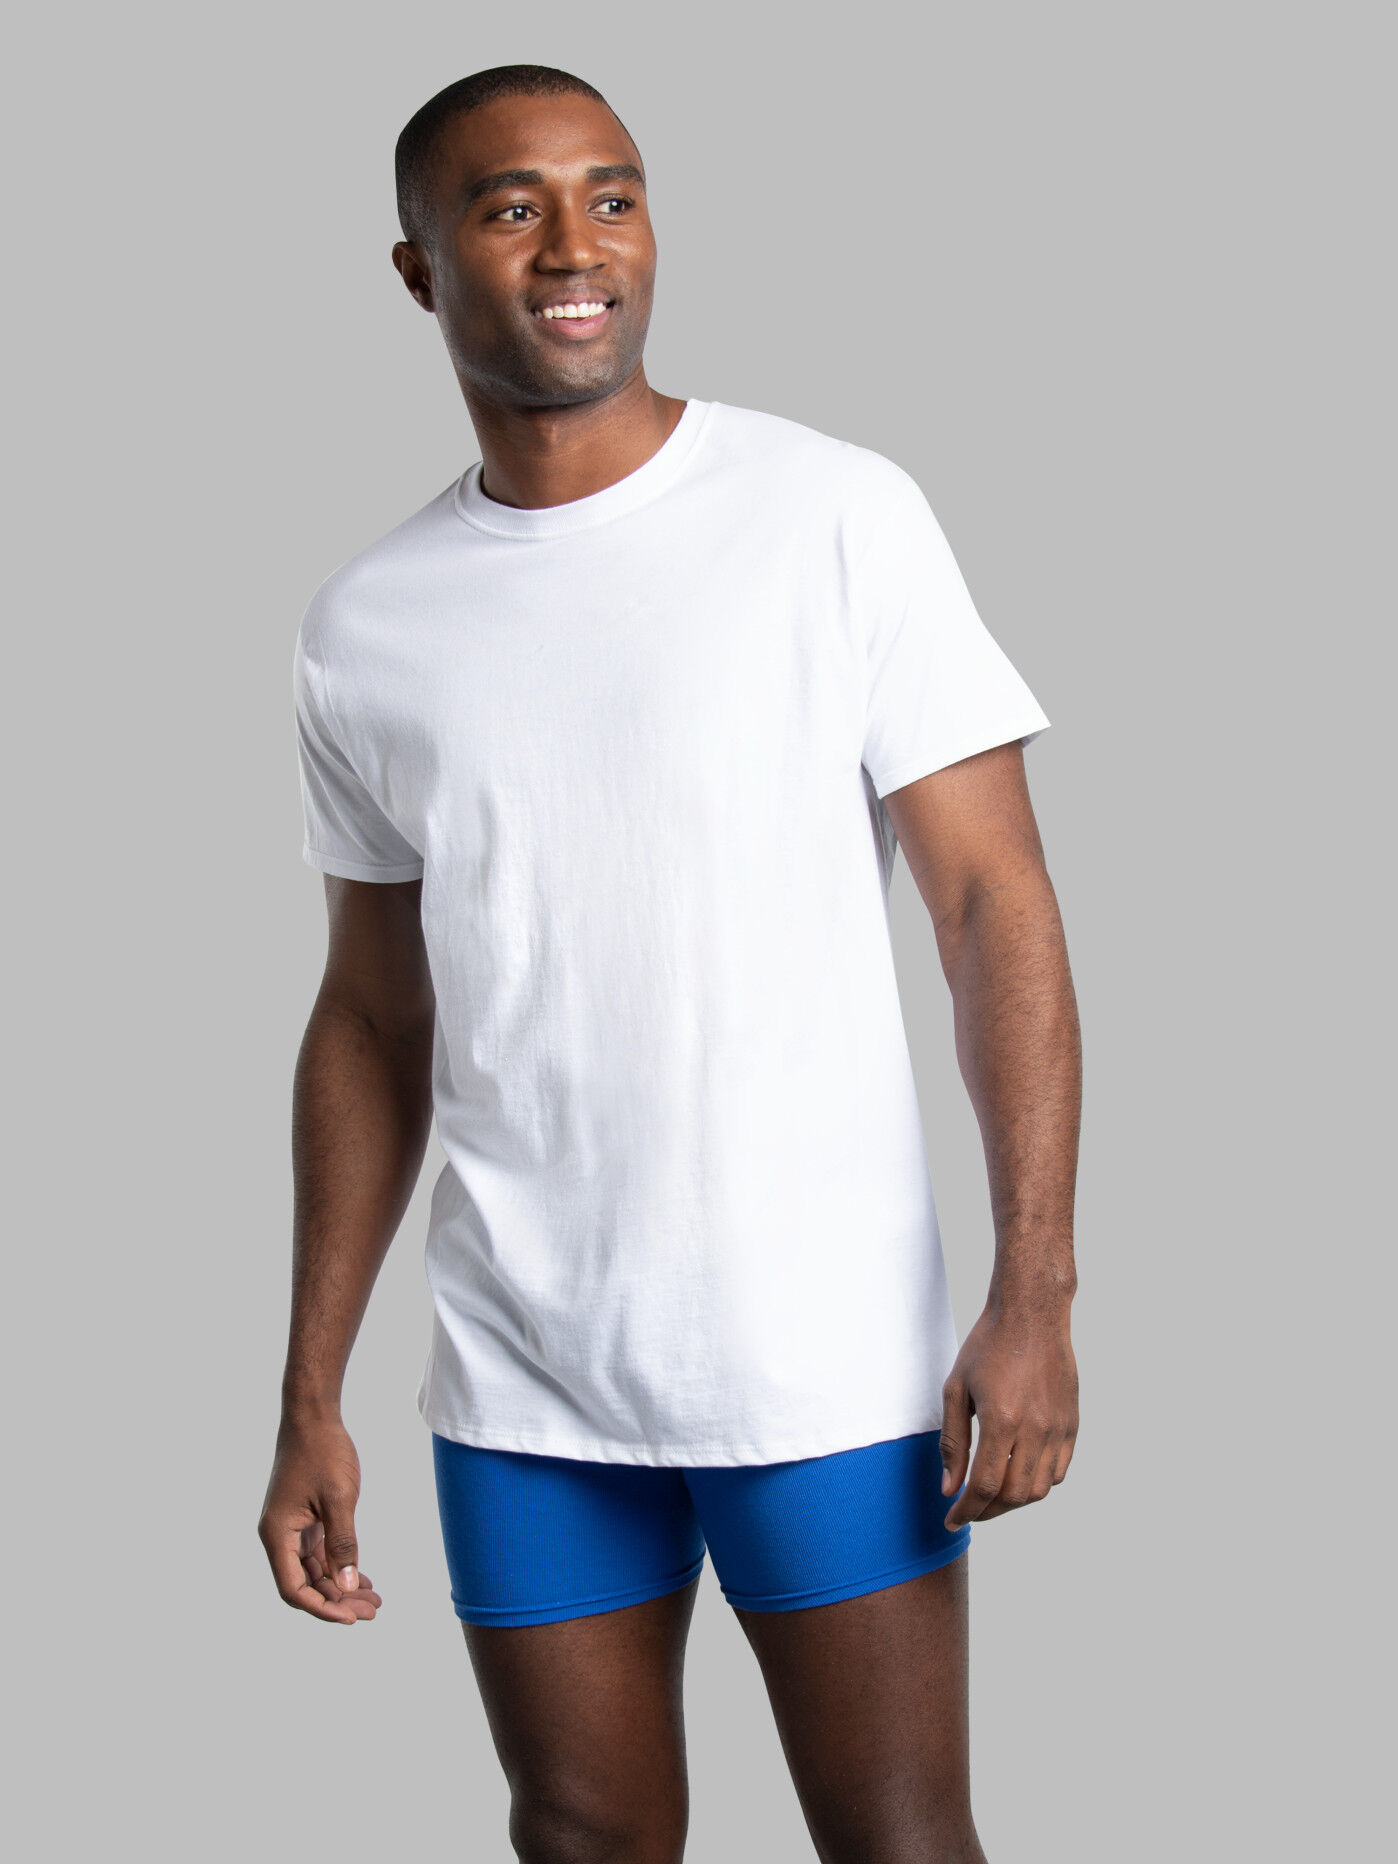 Men's Short Sleeve White Crew T-Shirts | Fruit of the Loom